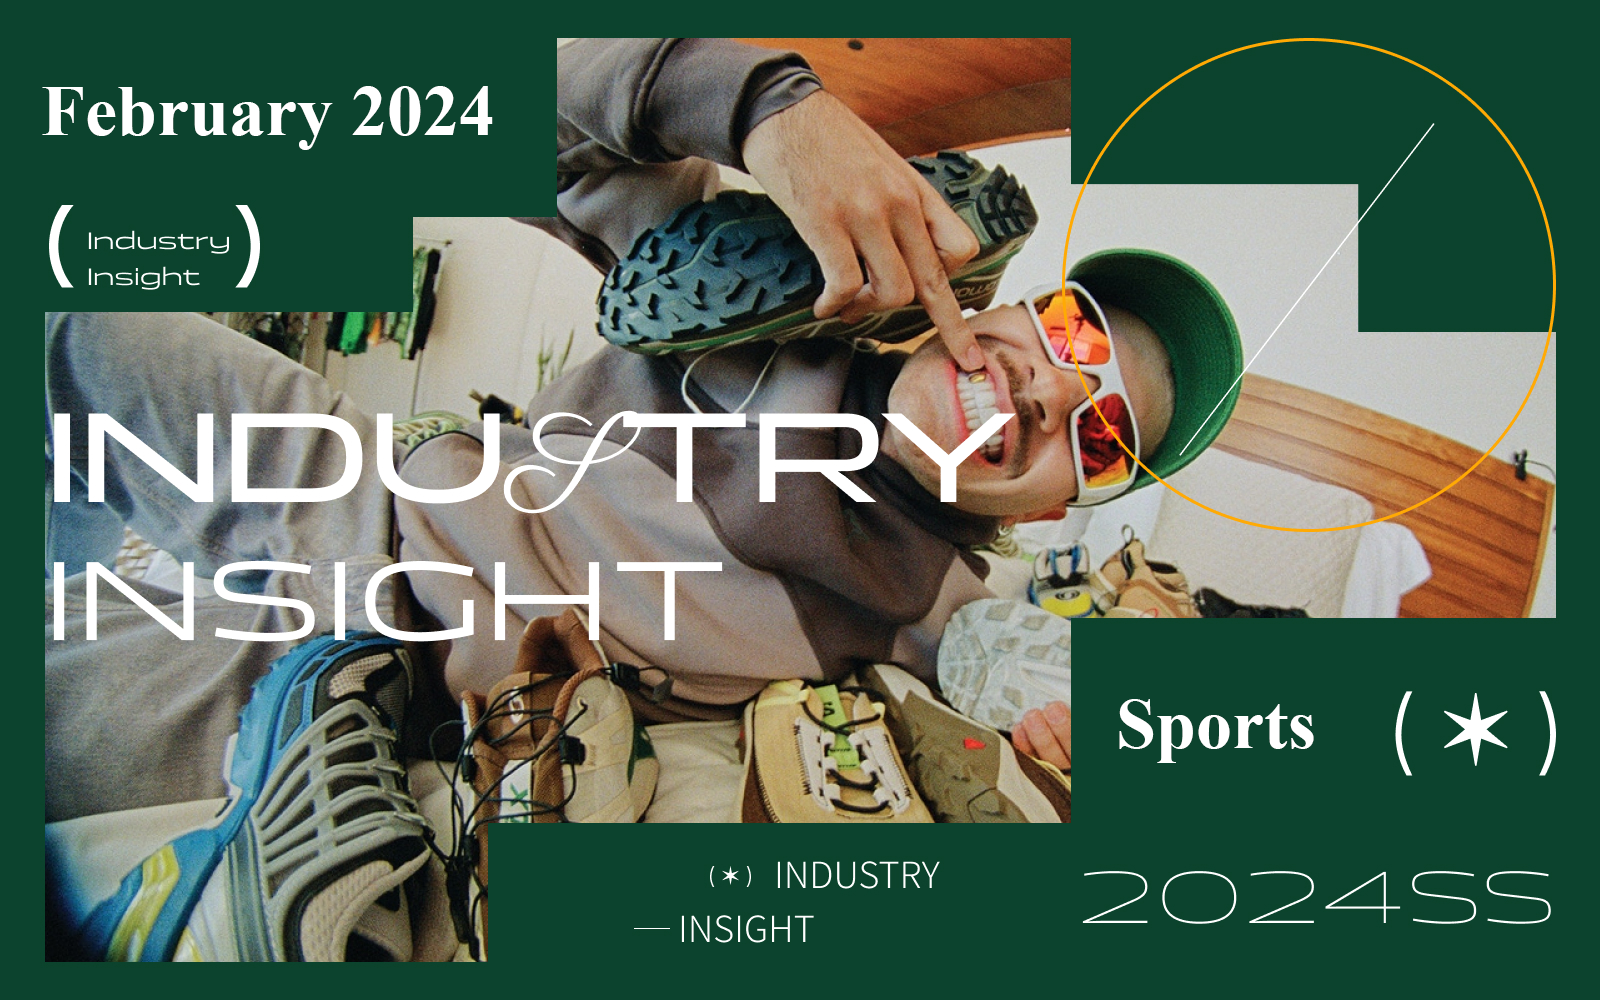 February 2024 -- The Industry Insight of Sportswear